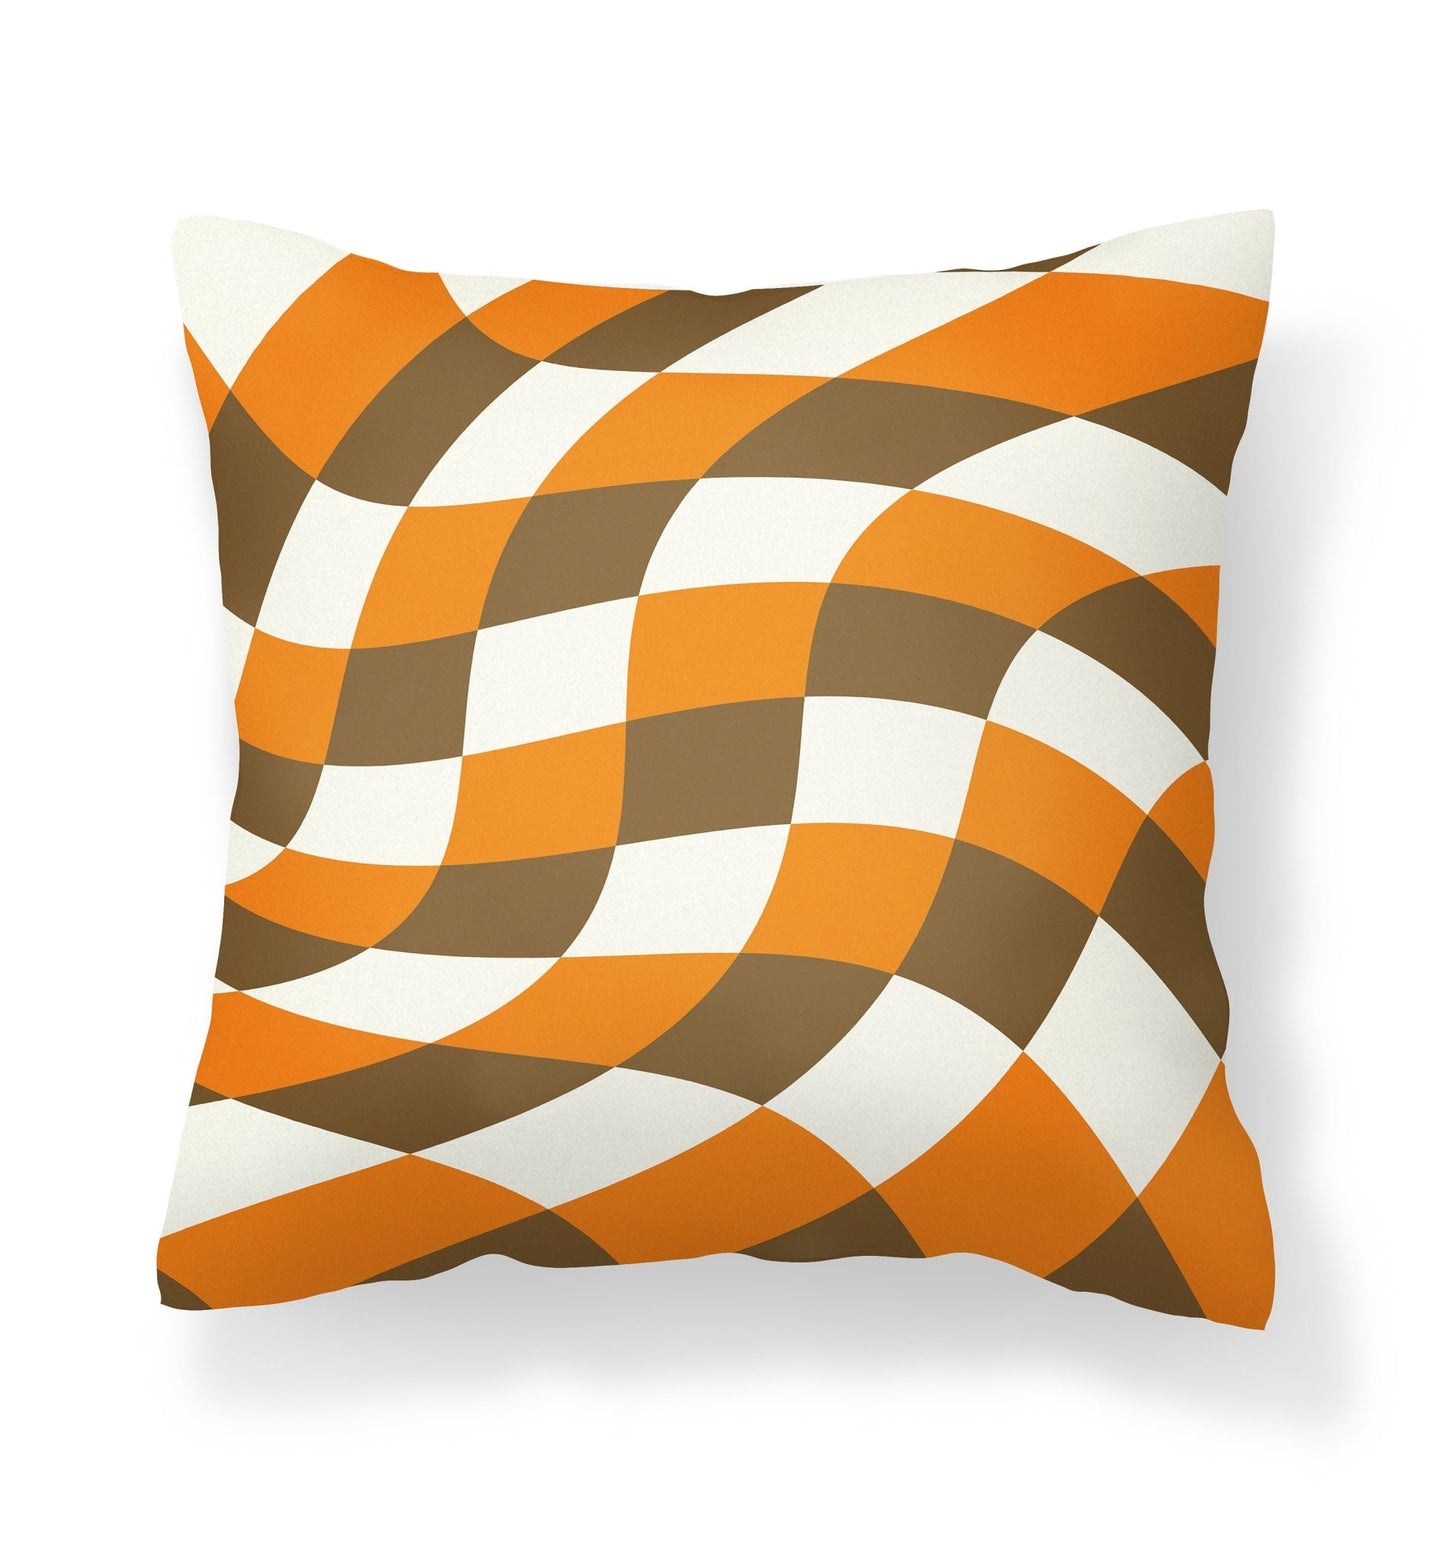 Checkered Pillow Case - Wavy Orange and Brown - Throw Pillows